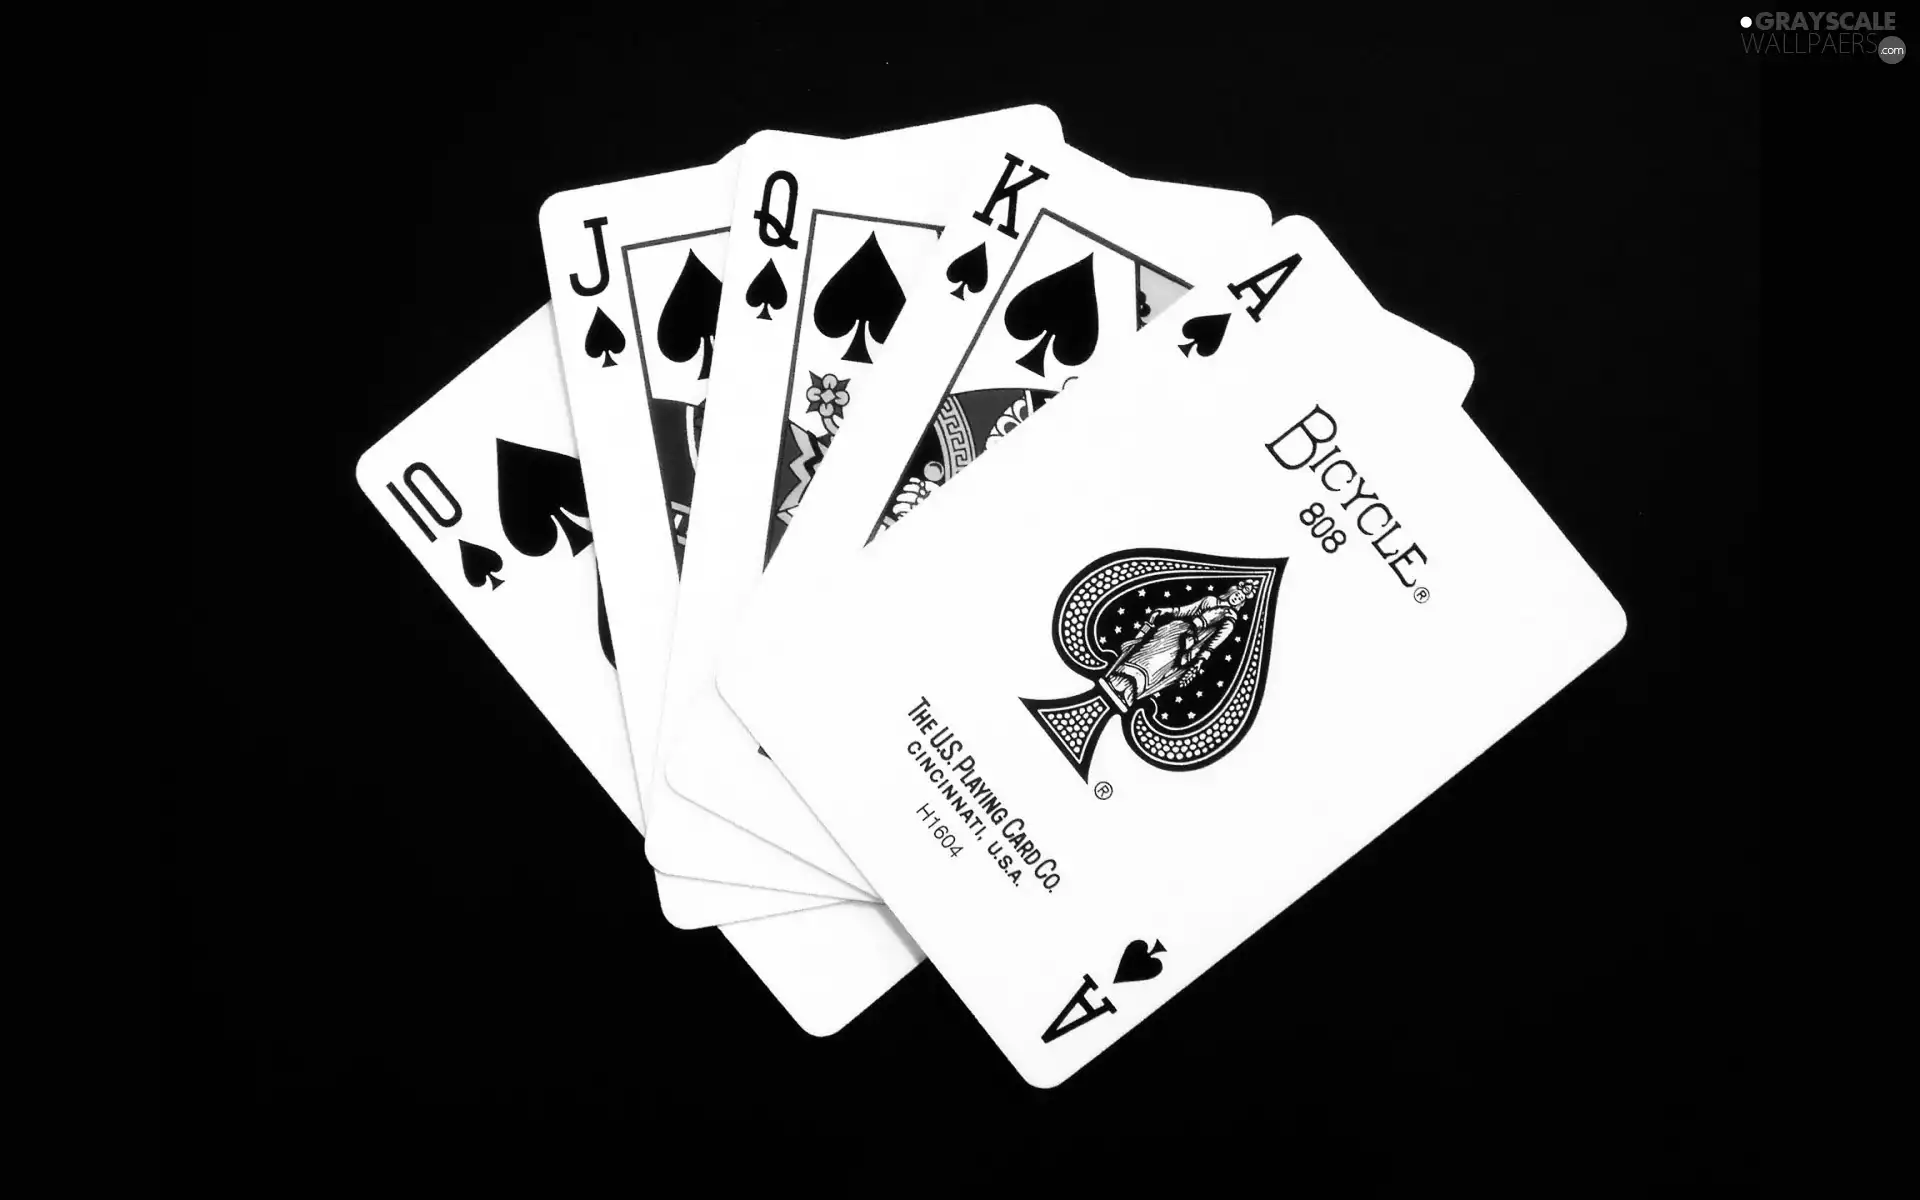 Poker, game, Card